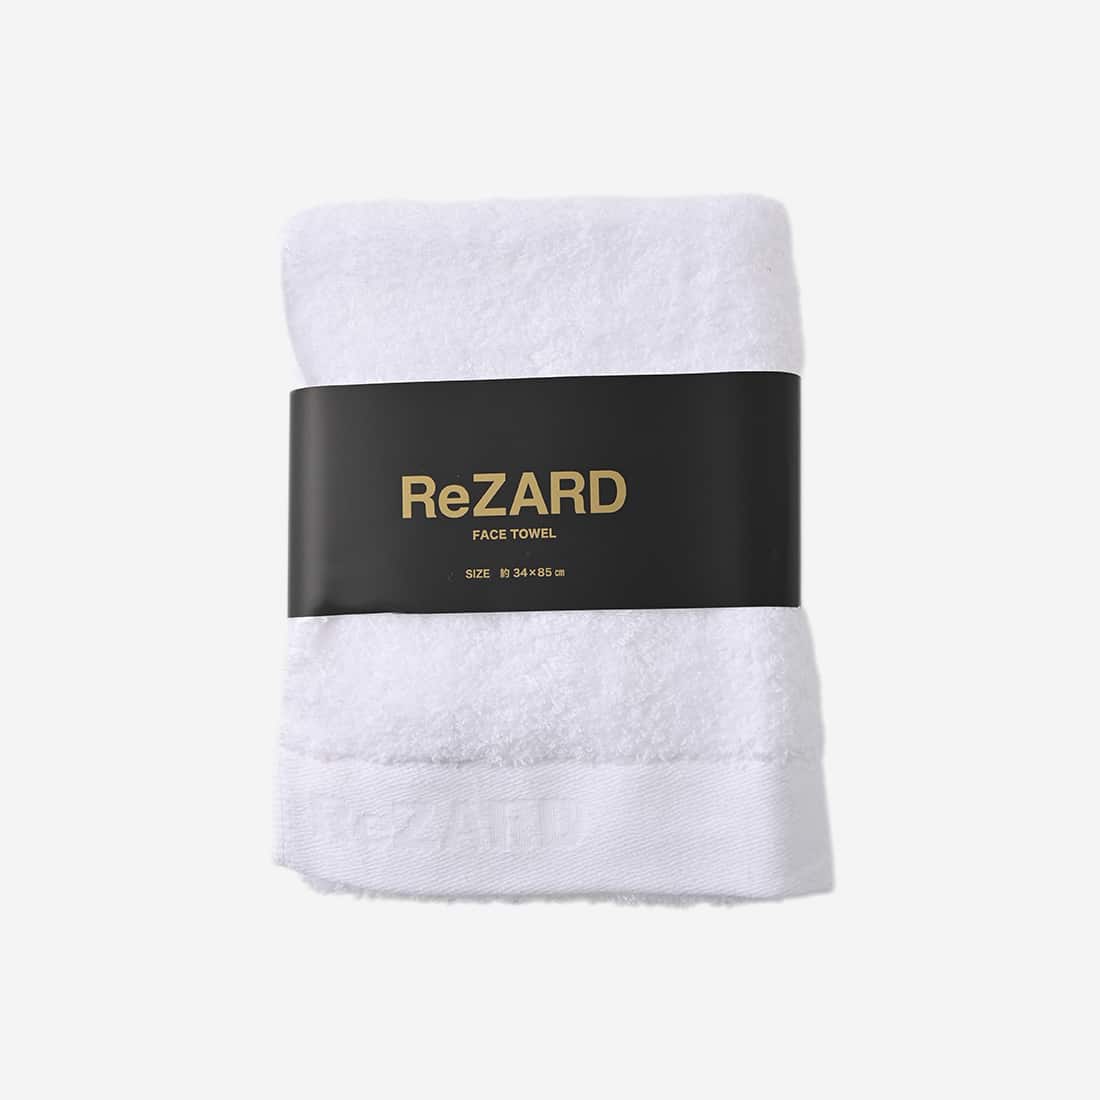 【ReZARD】Face Towel(WHITE)